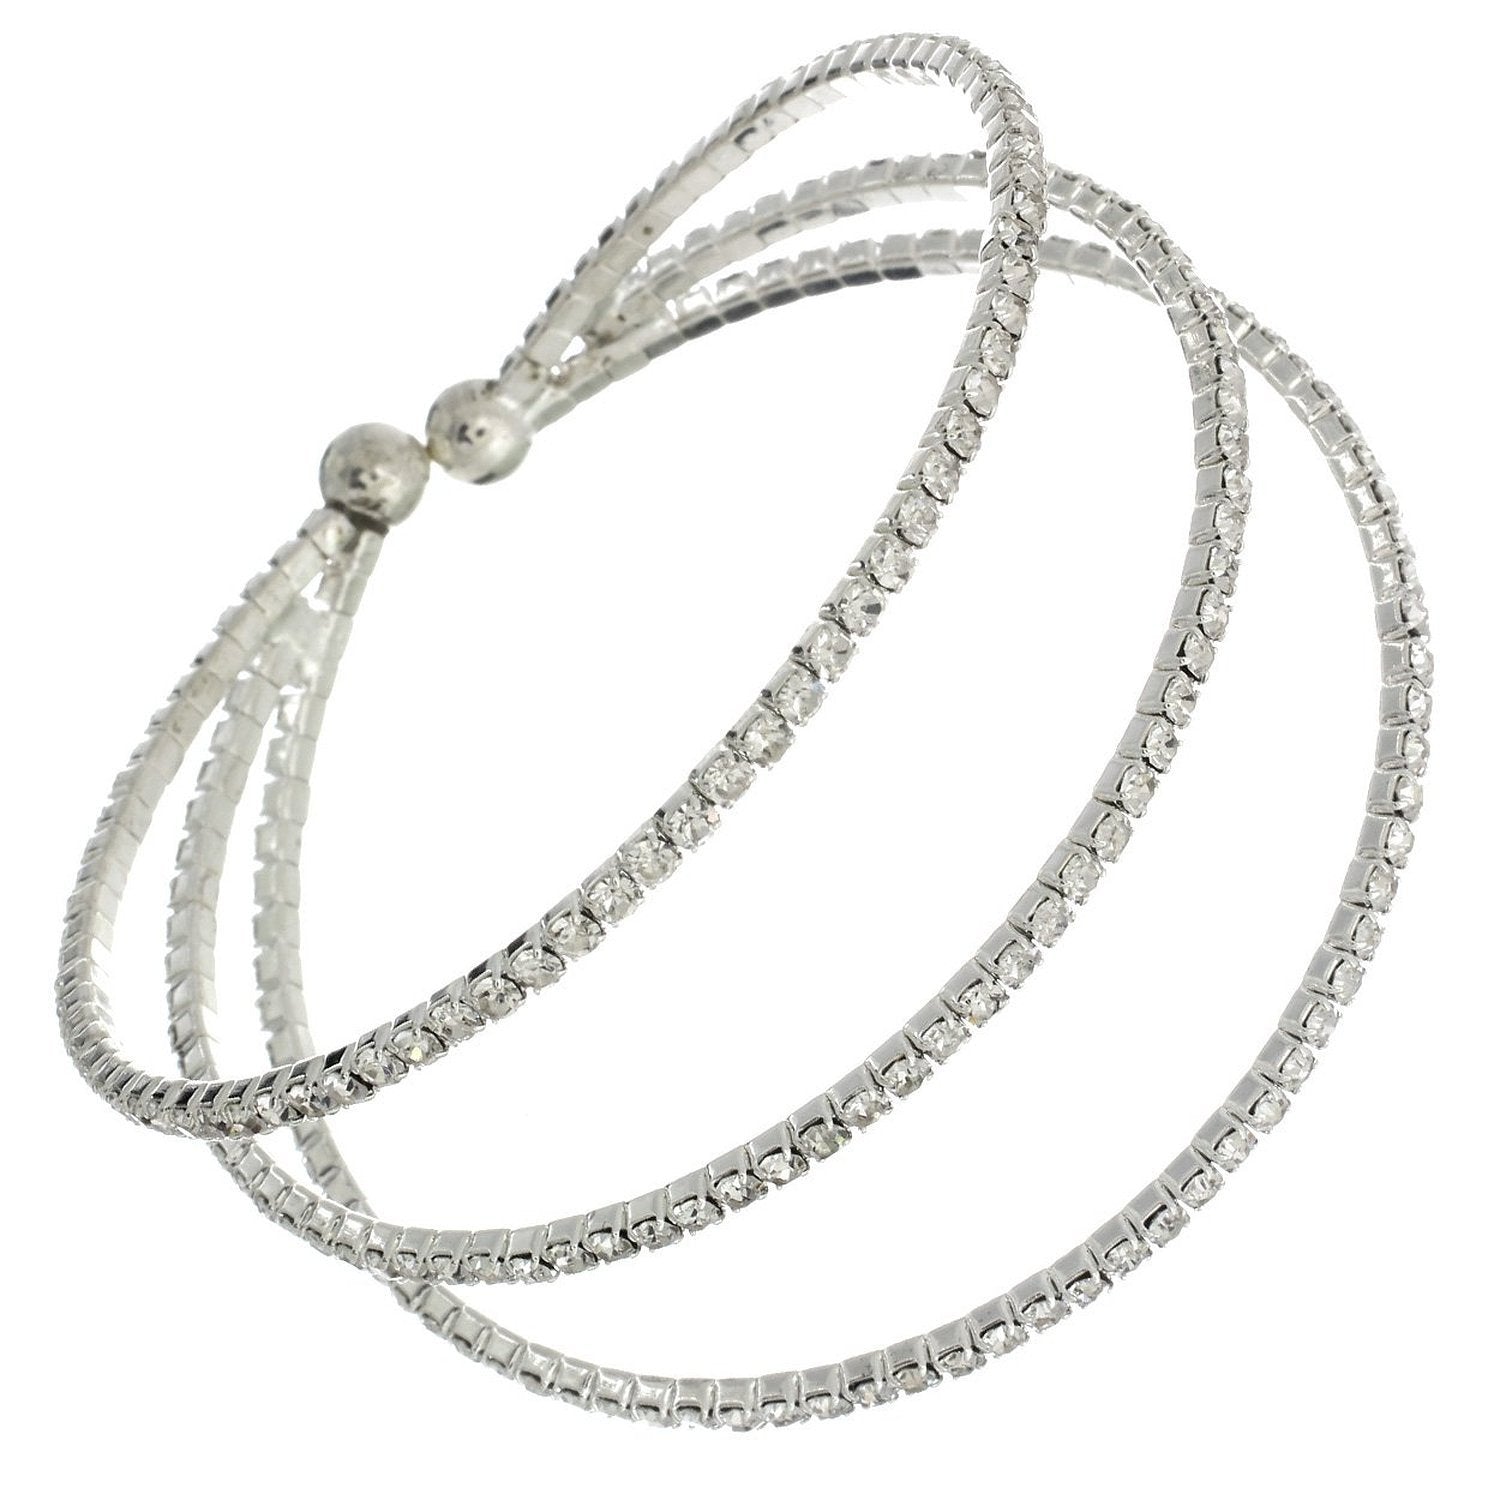 Rhinestone Style Silver Color Triple Cuff Bracelet